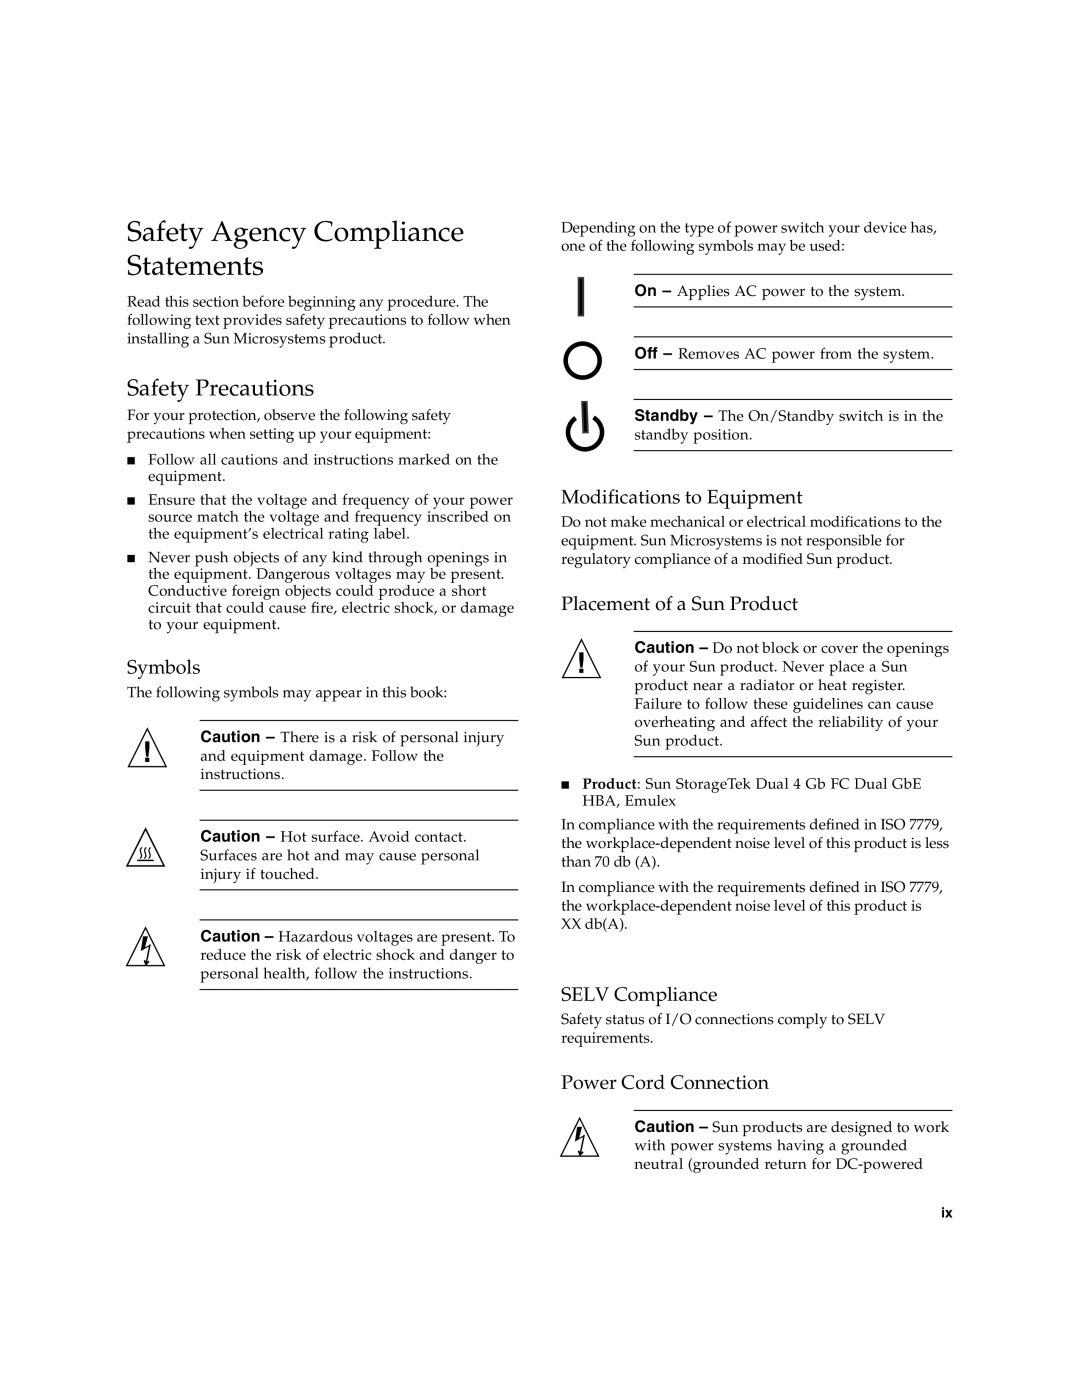 Sun Microsystems SG-XPCIE2FCGBE-E-Z Safety Agency Compliance Statements, Safety Precautions, Symbols, SELV Compliance 